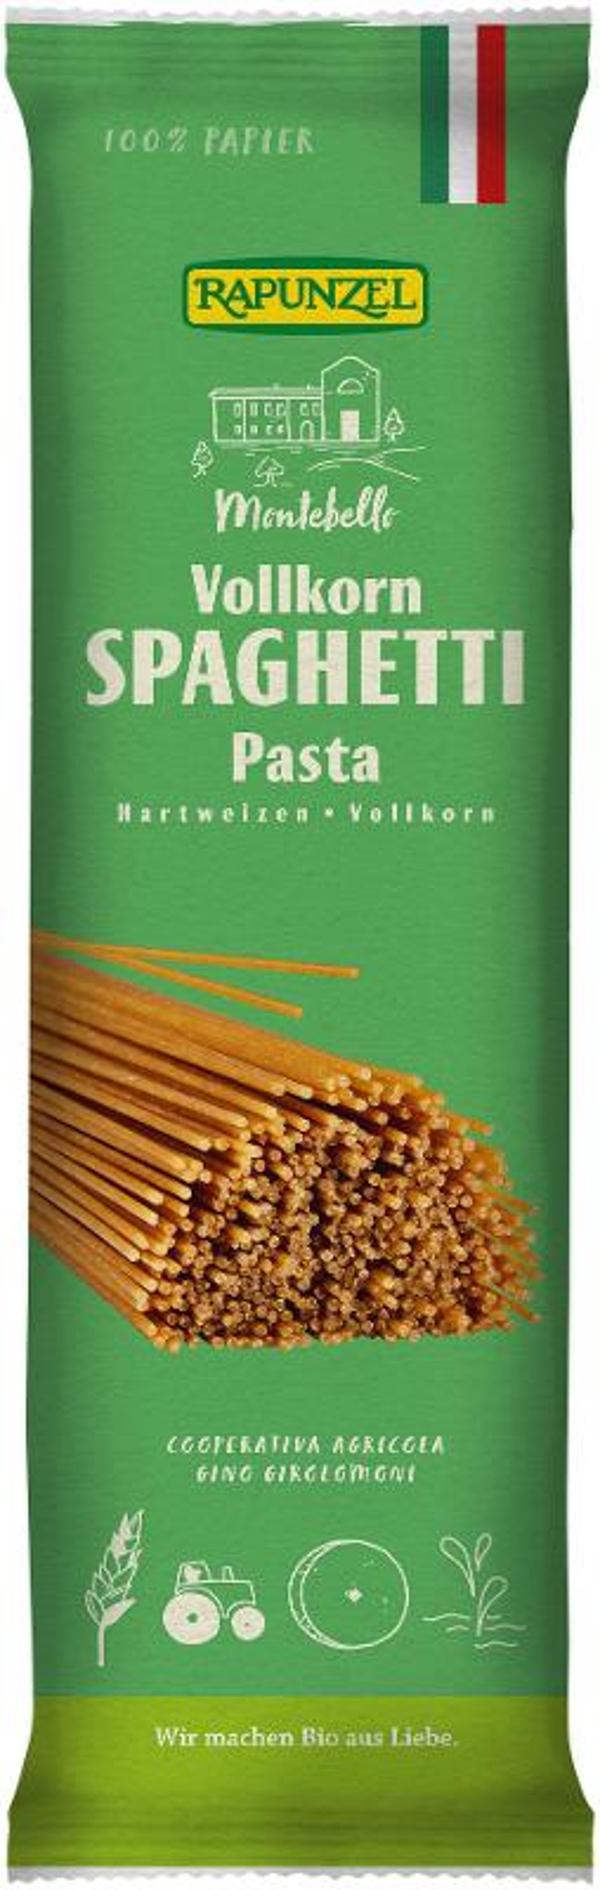 Produktfoto zu Spaghetti Vollkorn 500g Rapunzel